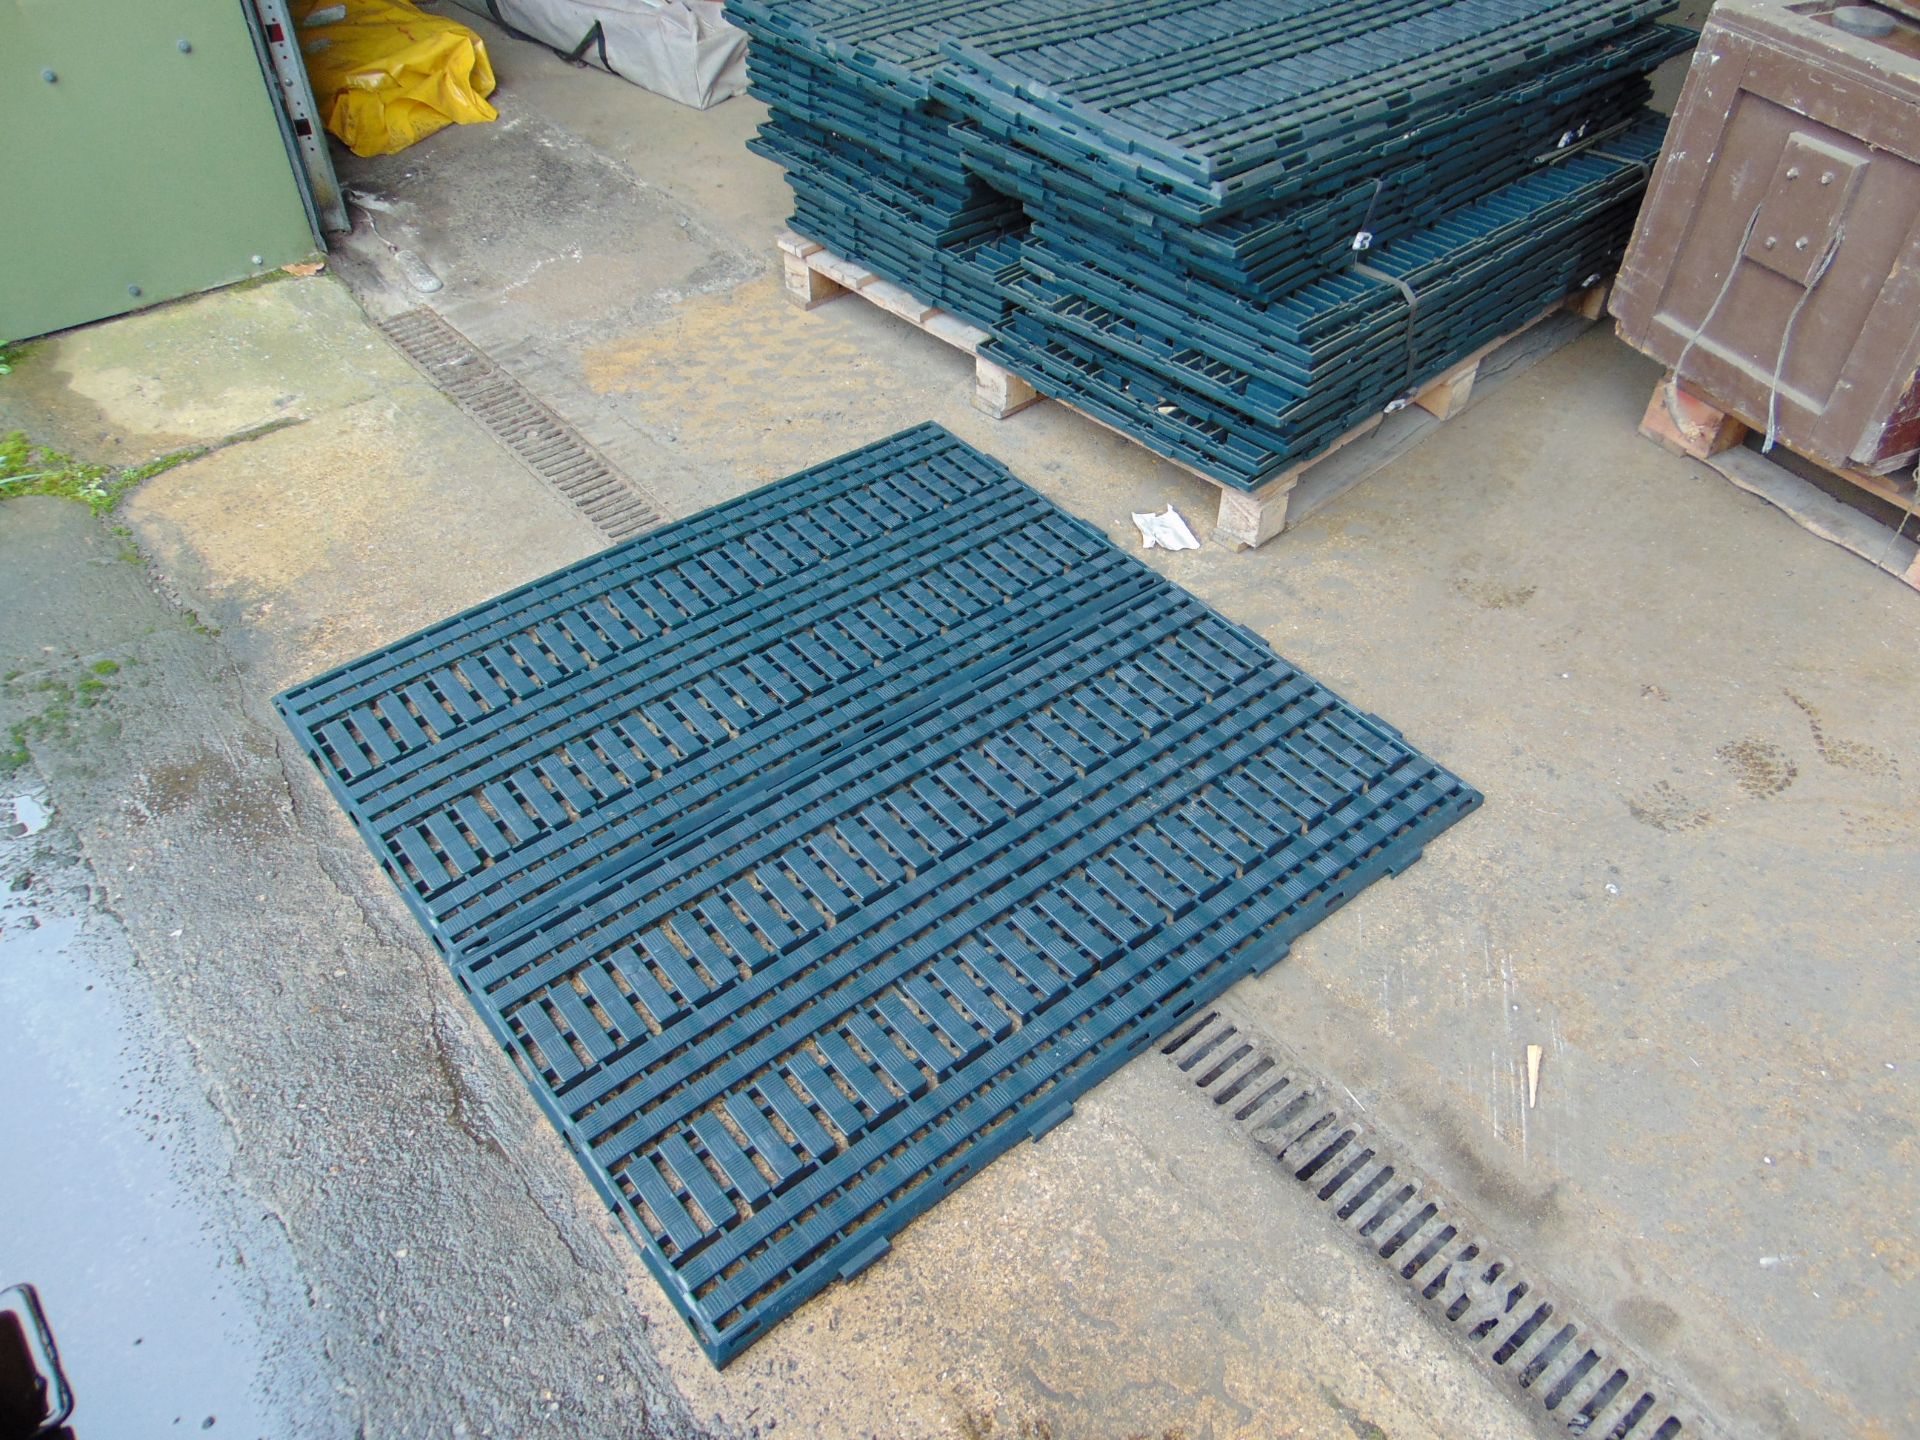 38 x Arca Systems Plastic Interlocking Flooring Sections - 120cm x 60cm